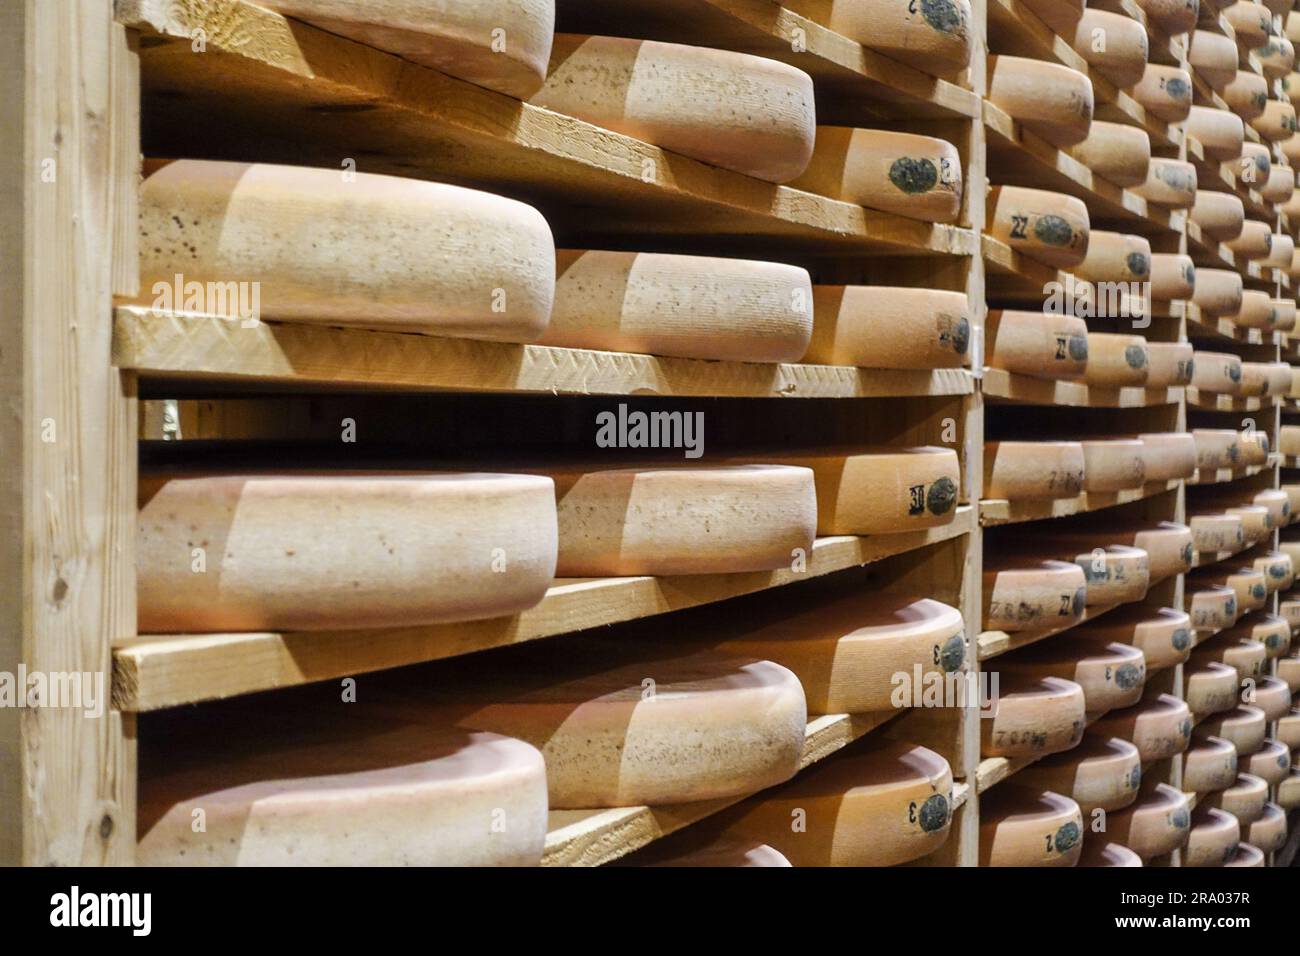 Comté cheese maturing in the cellars of Fort Saint-Antoine, near Pontarlier, Franche-Comté, France Stock Photo